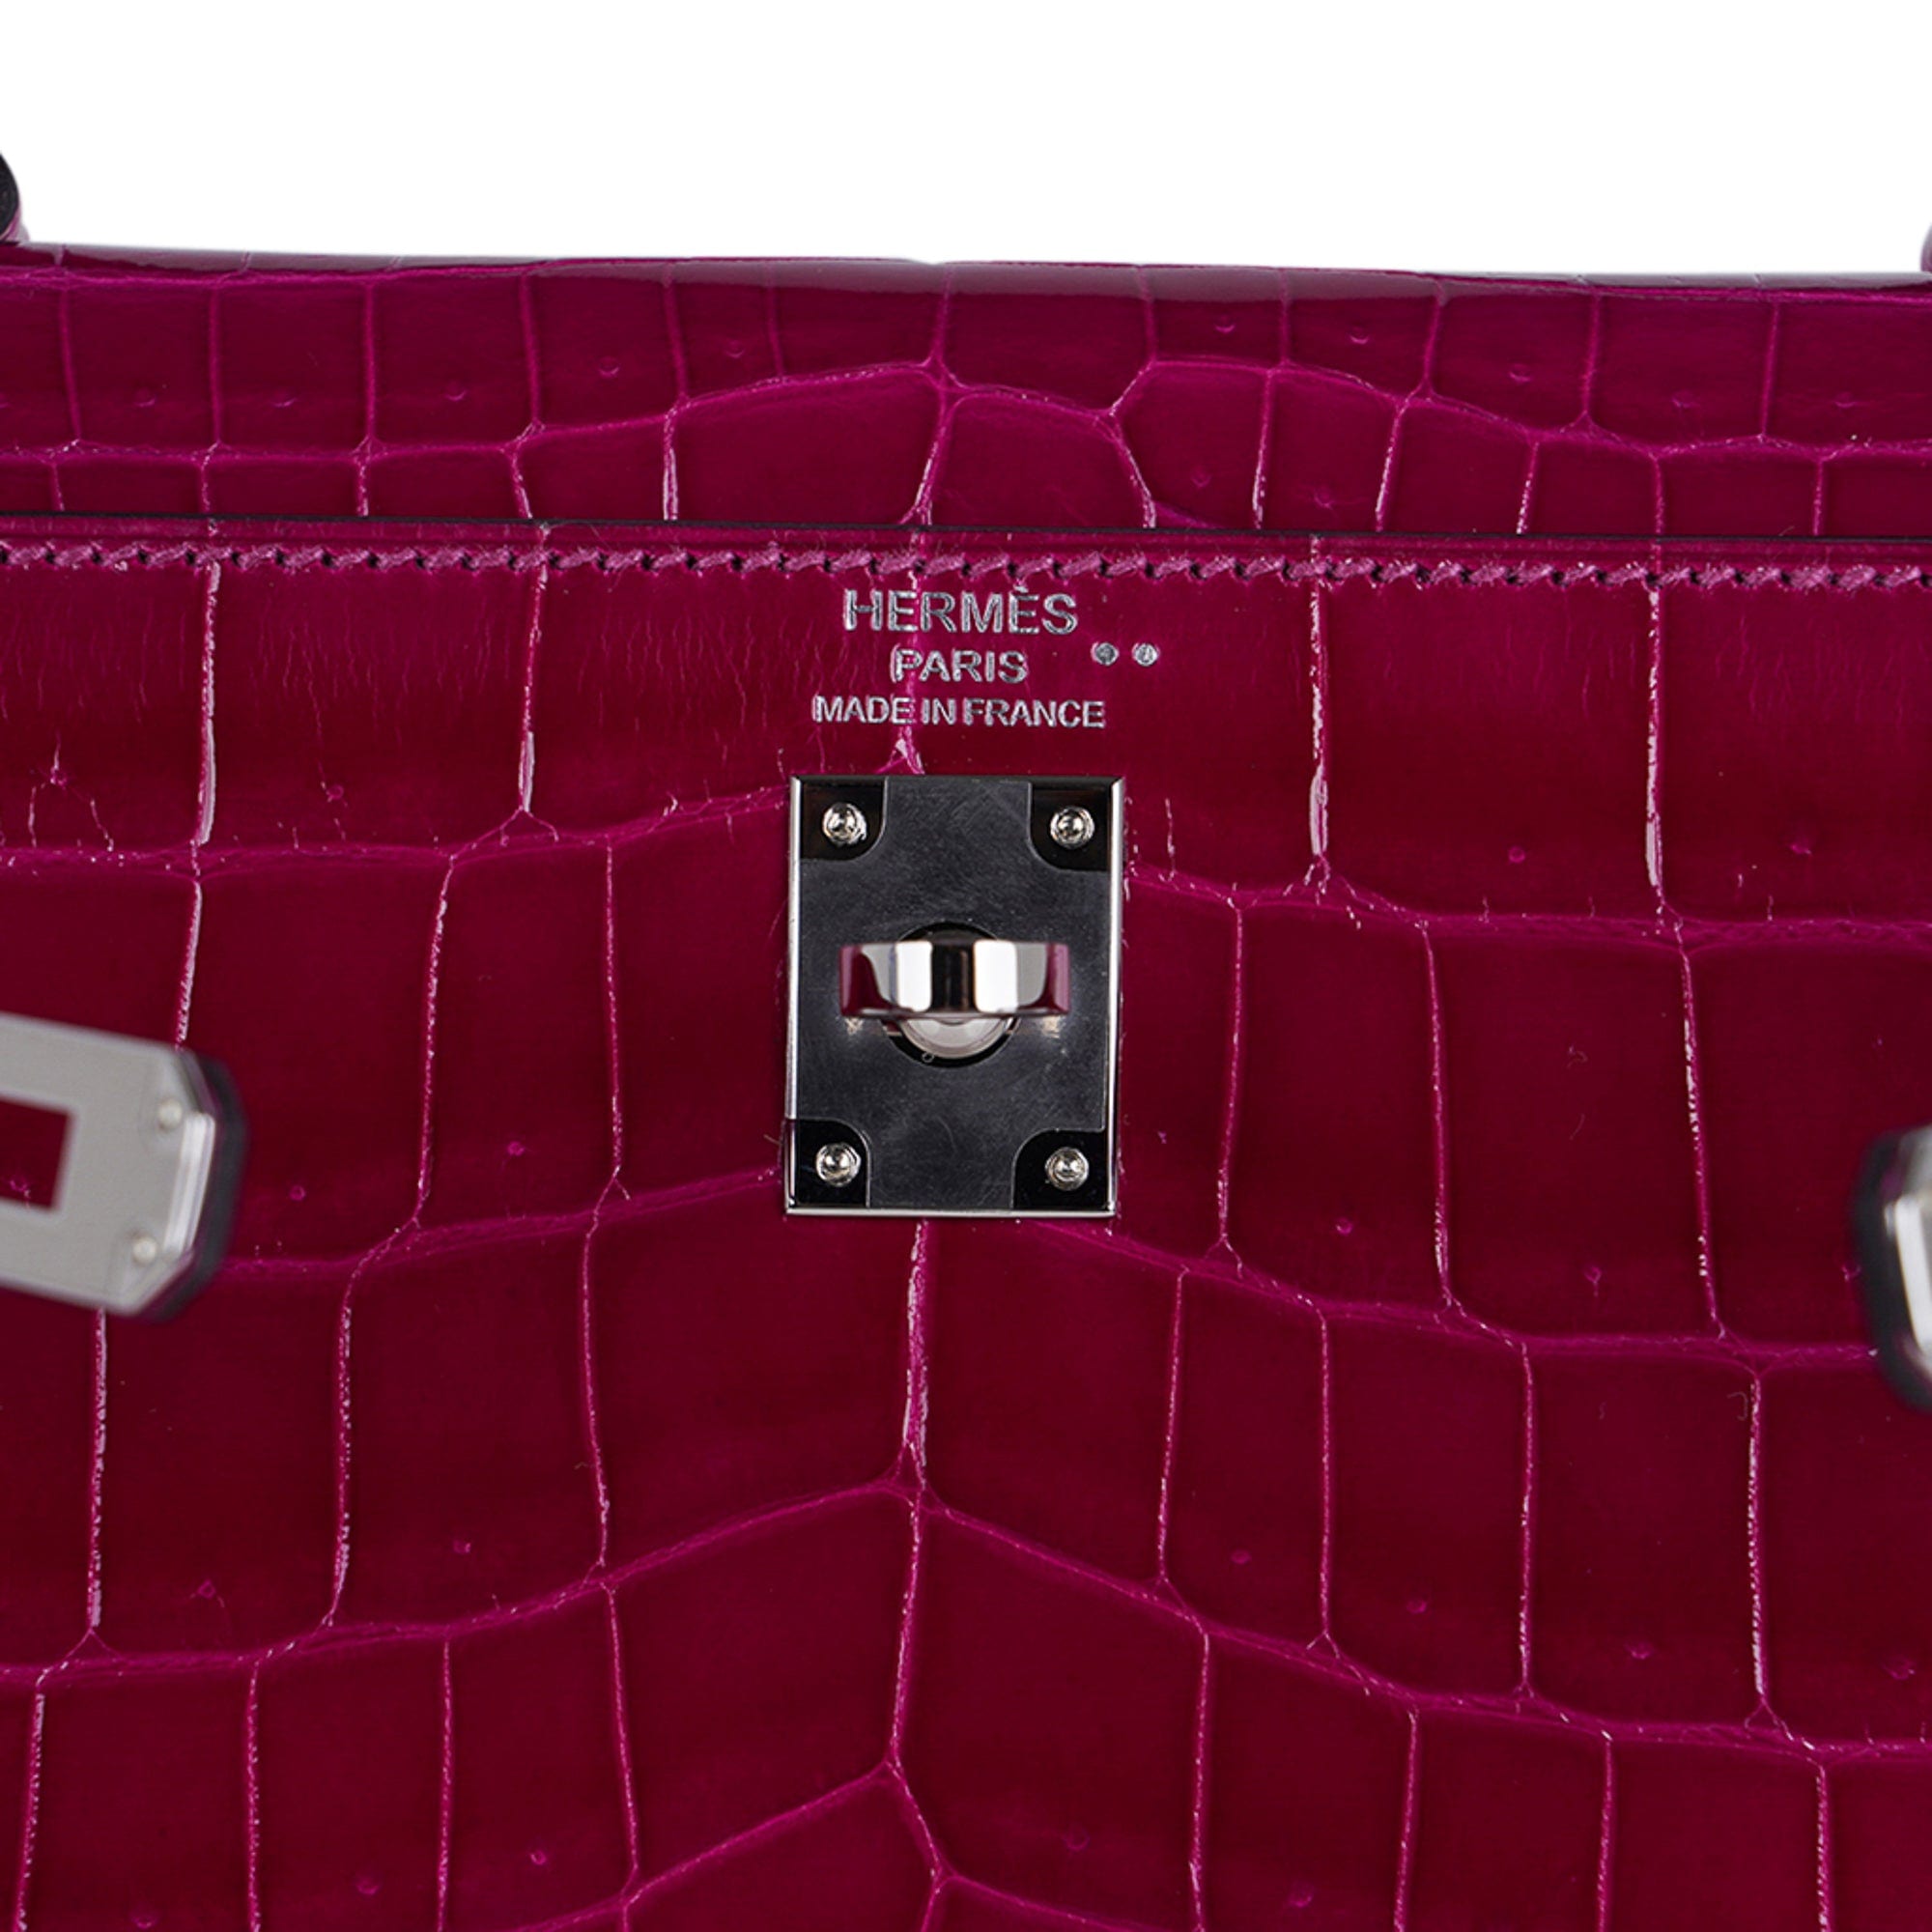 Hermes Kelly 25 Bag Sellier Rose Pourpre Crocodile Palladium Hardware